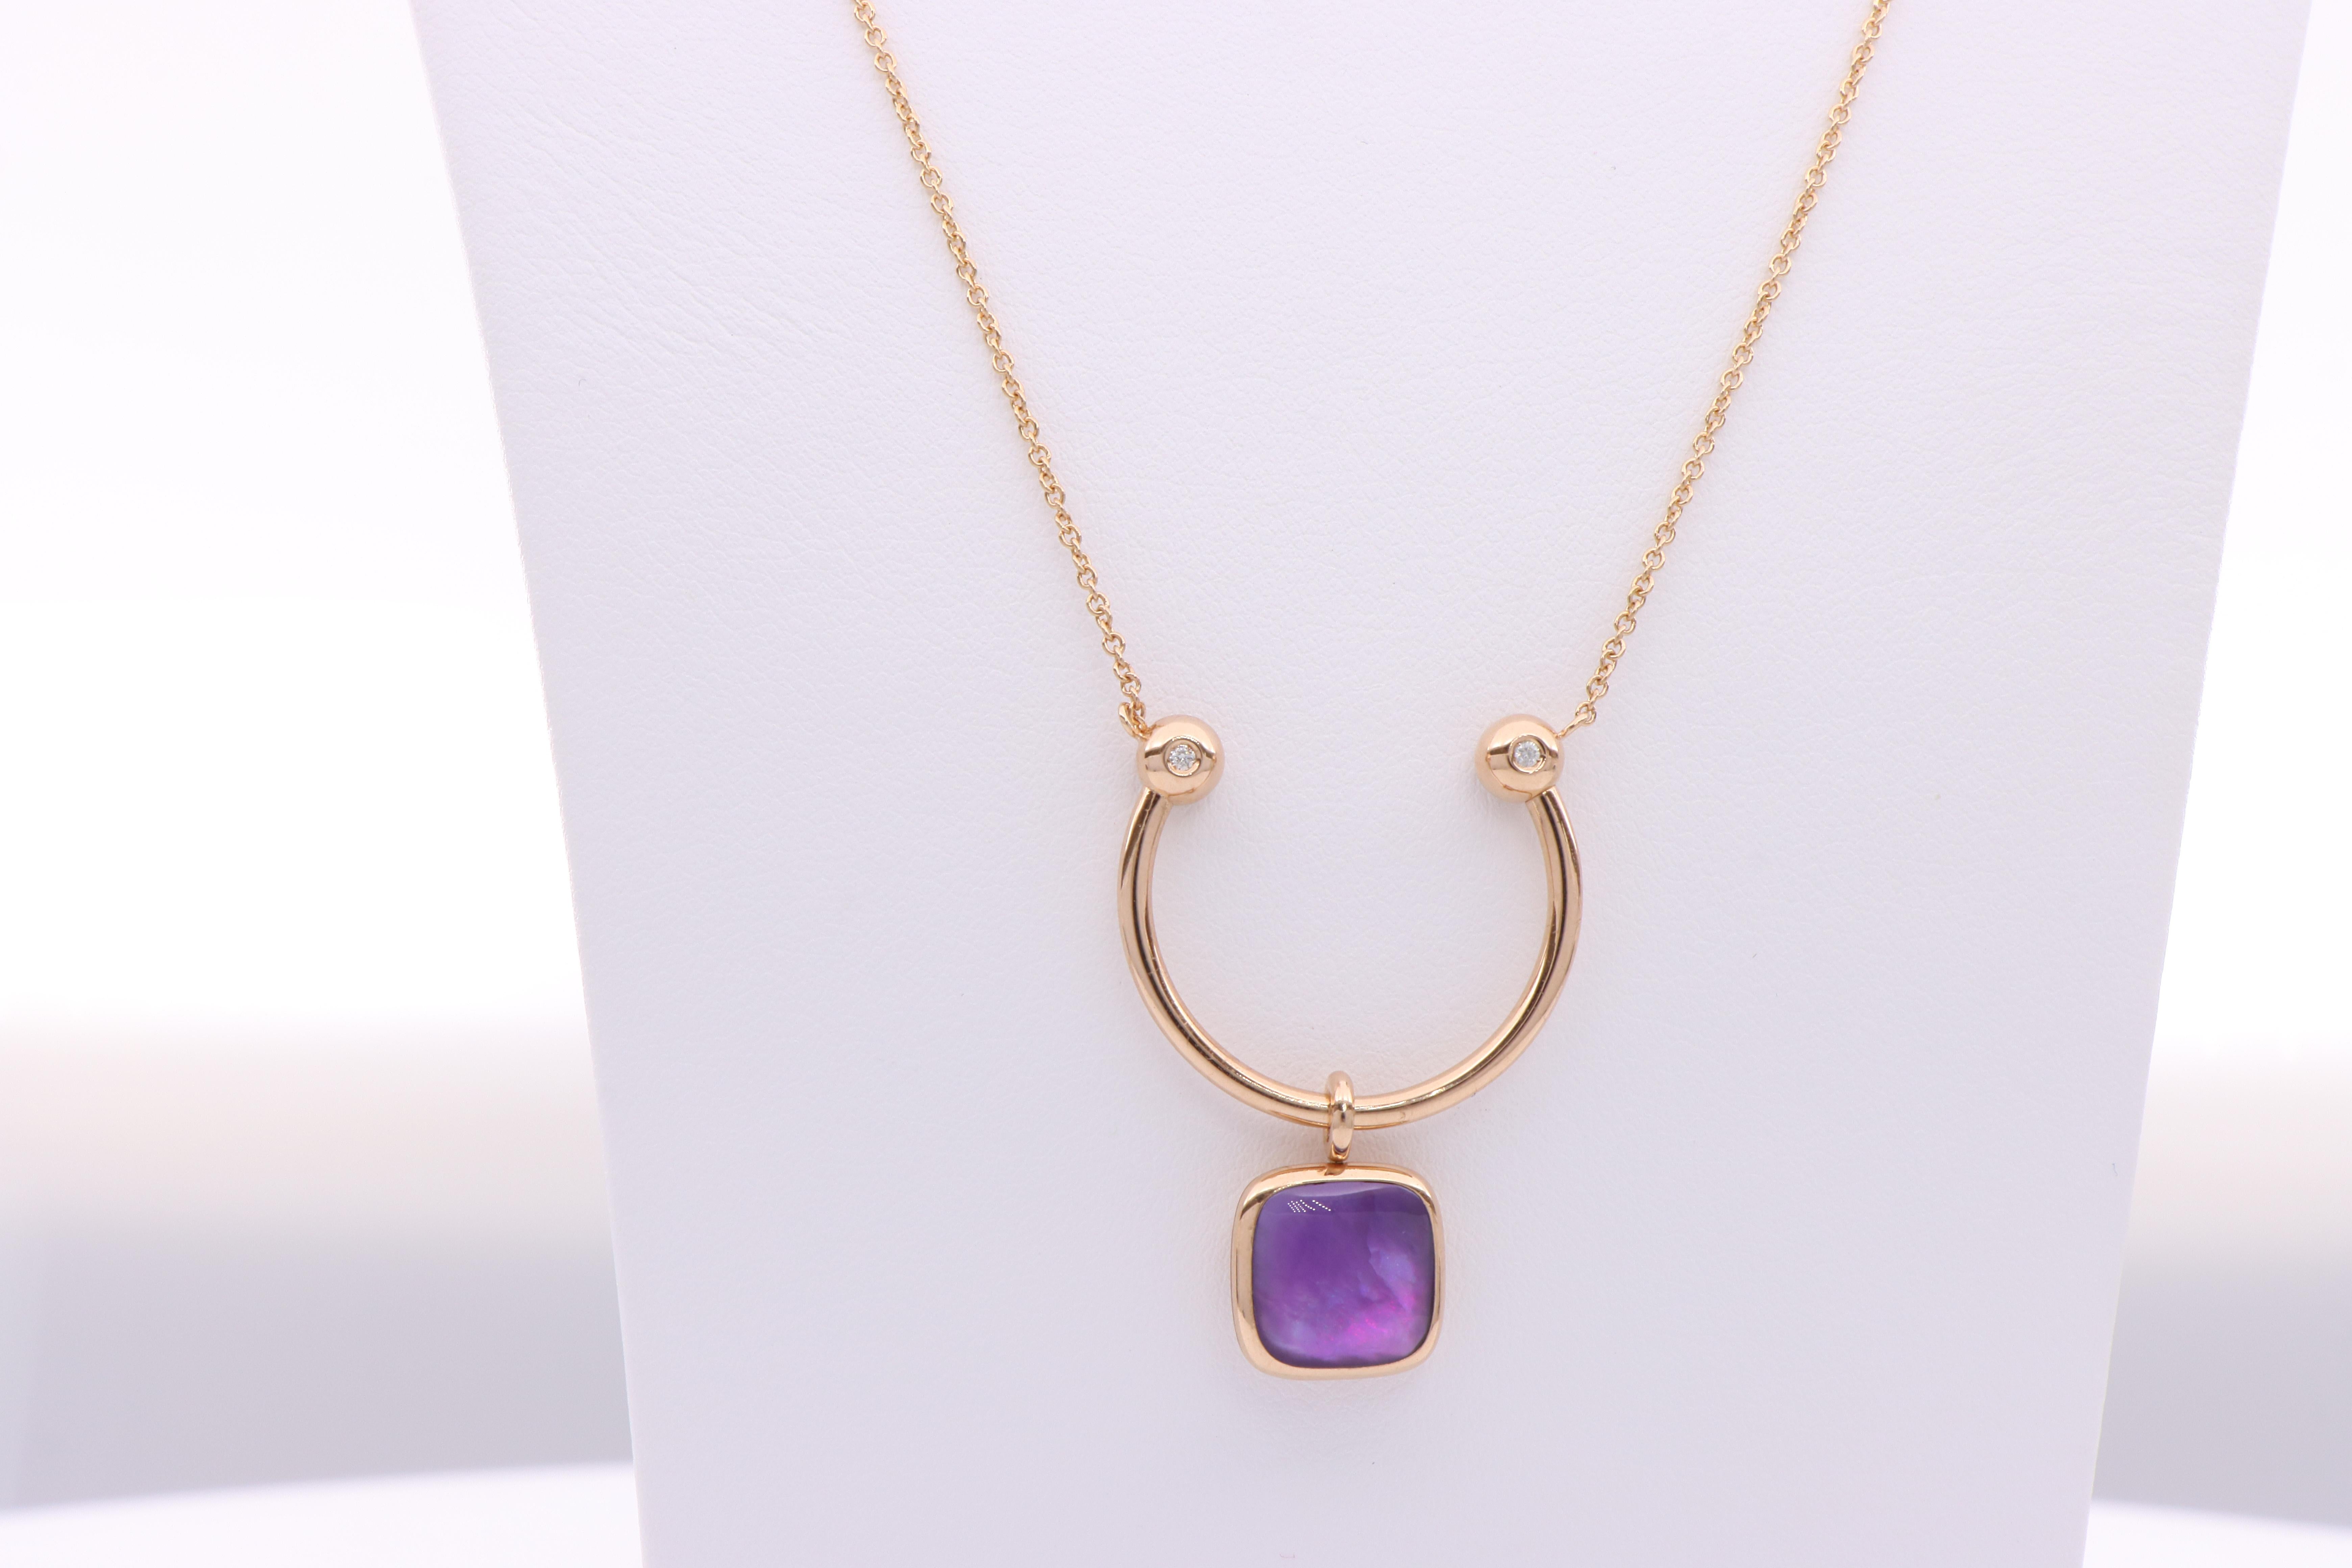 Brilliant Cut Reversible Square Purple Gemstone White Diamonds Necklace in 18 Karat Rose Gold For Sale